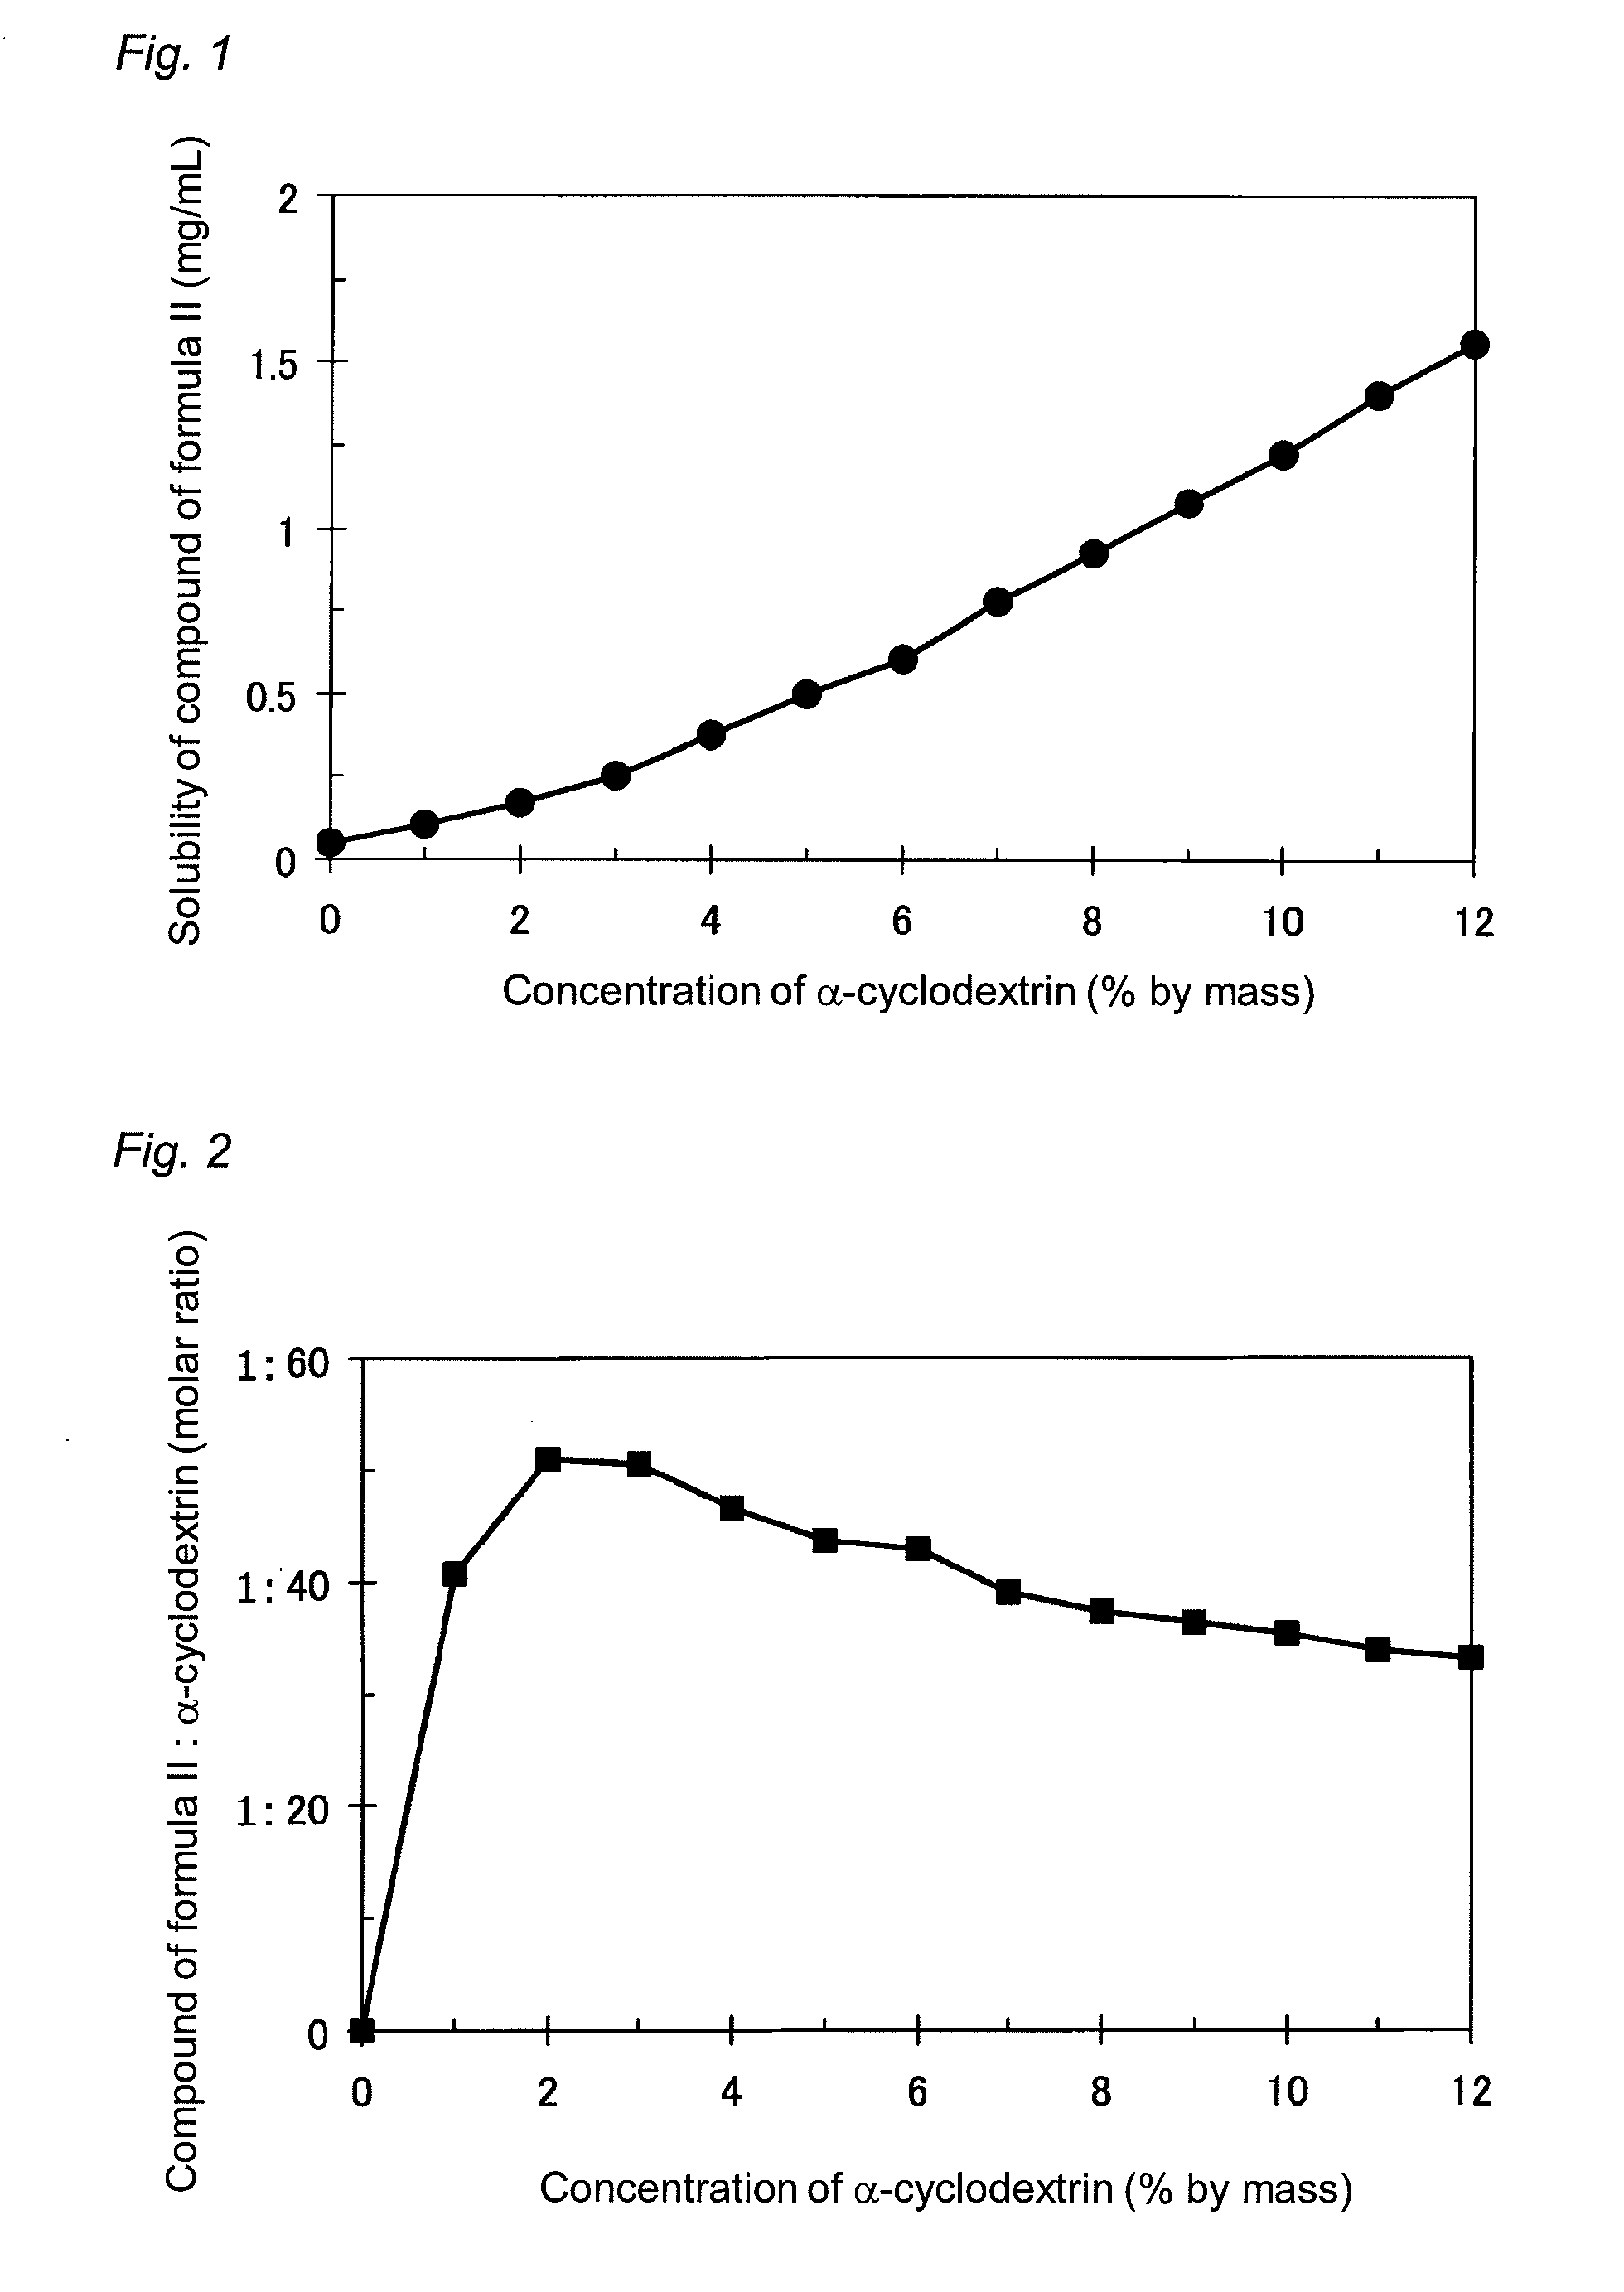 External preparation comprising prostaglandin derivative